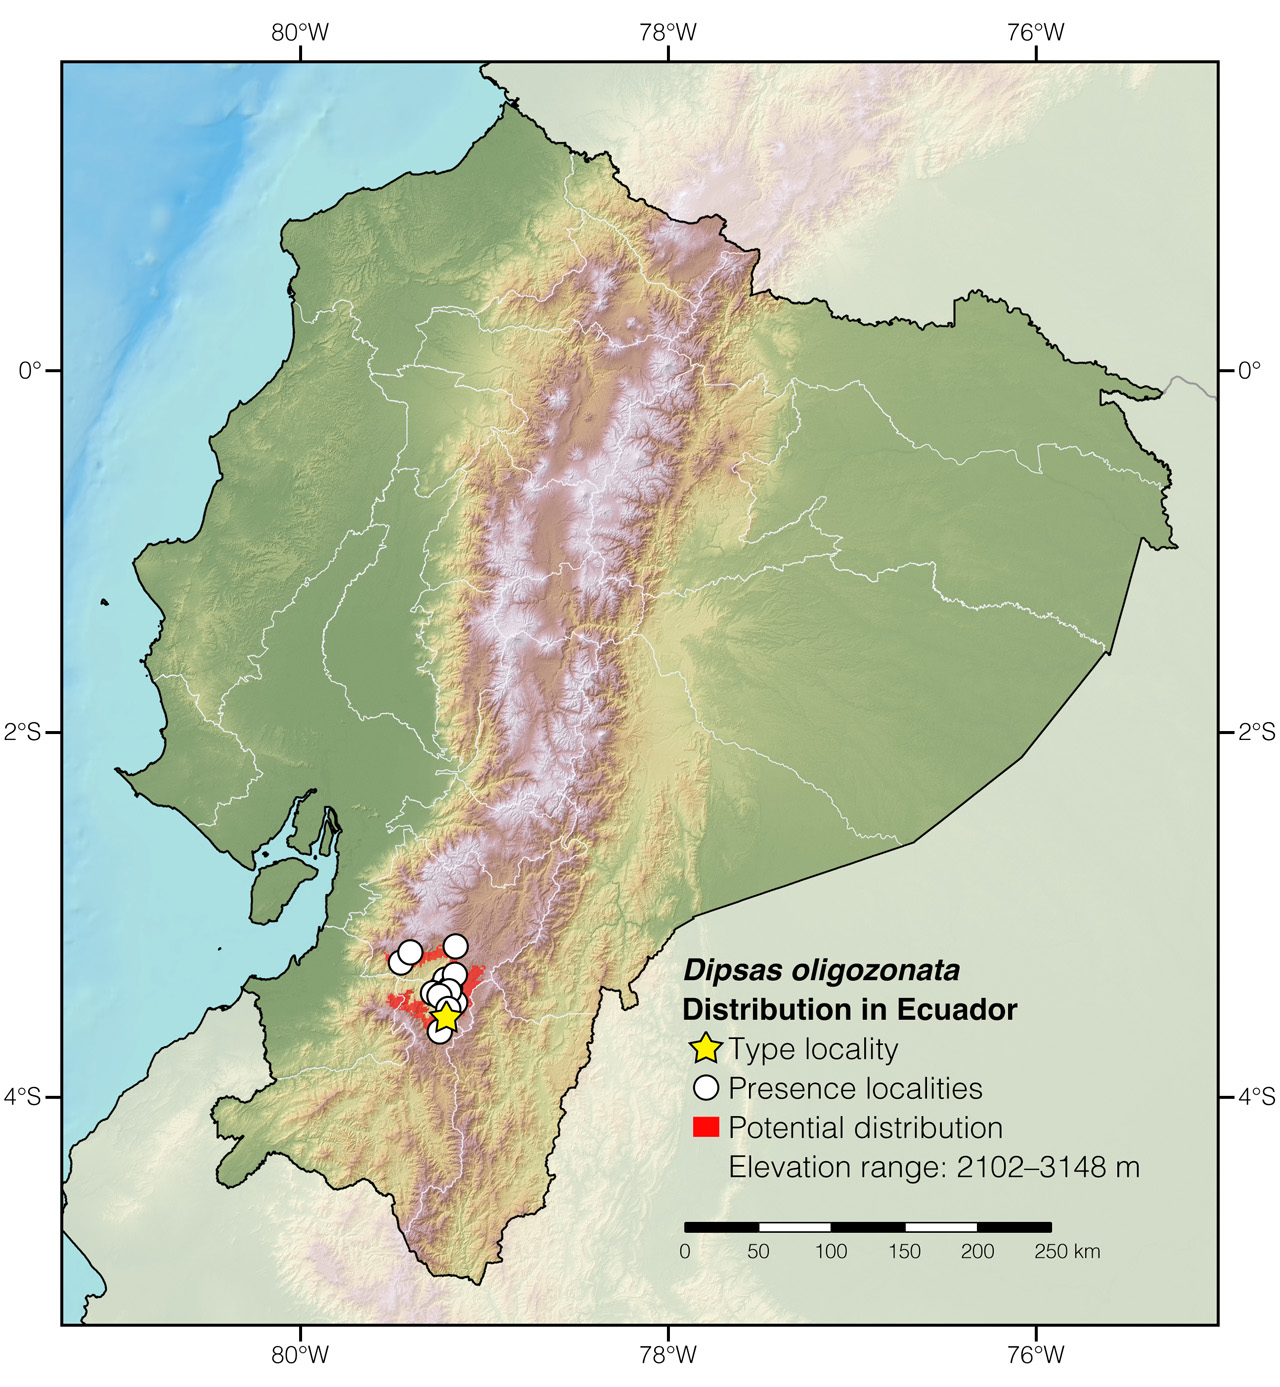 Distribution of Dipsas oligozonata in Ecuador